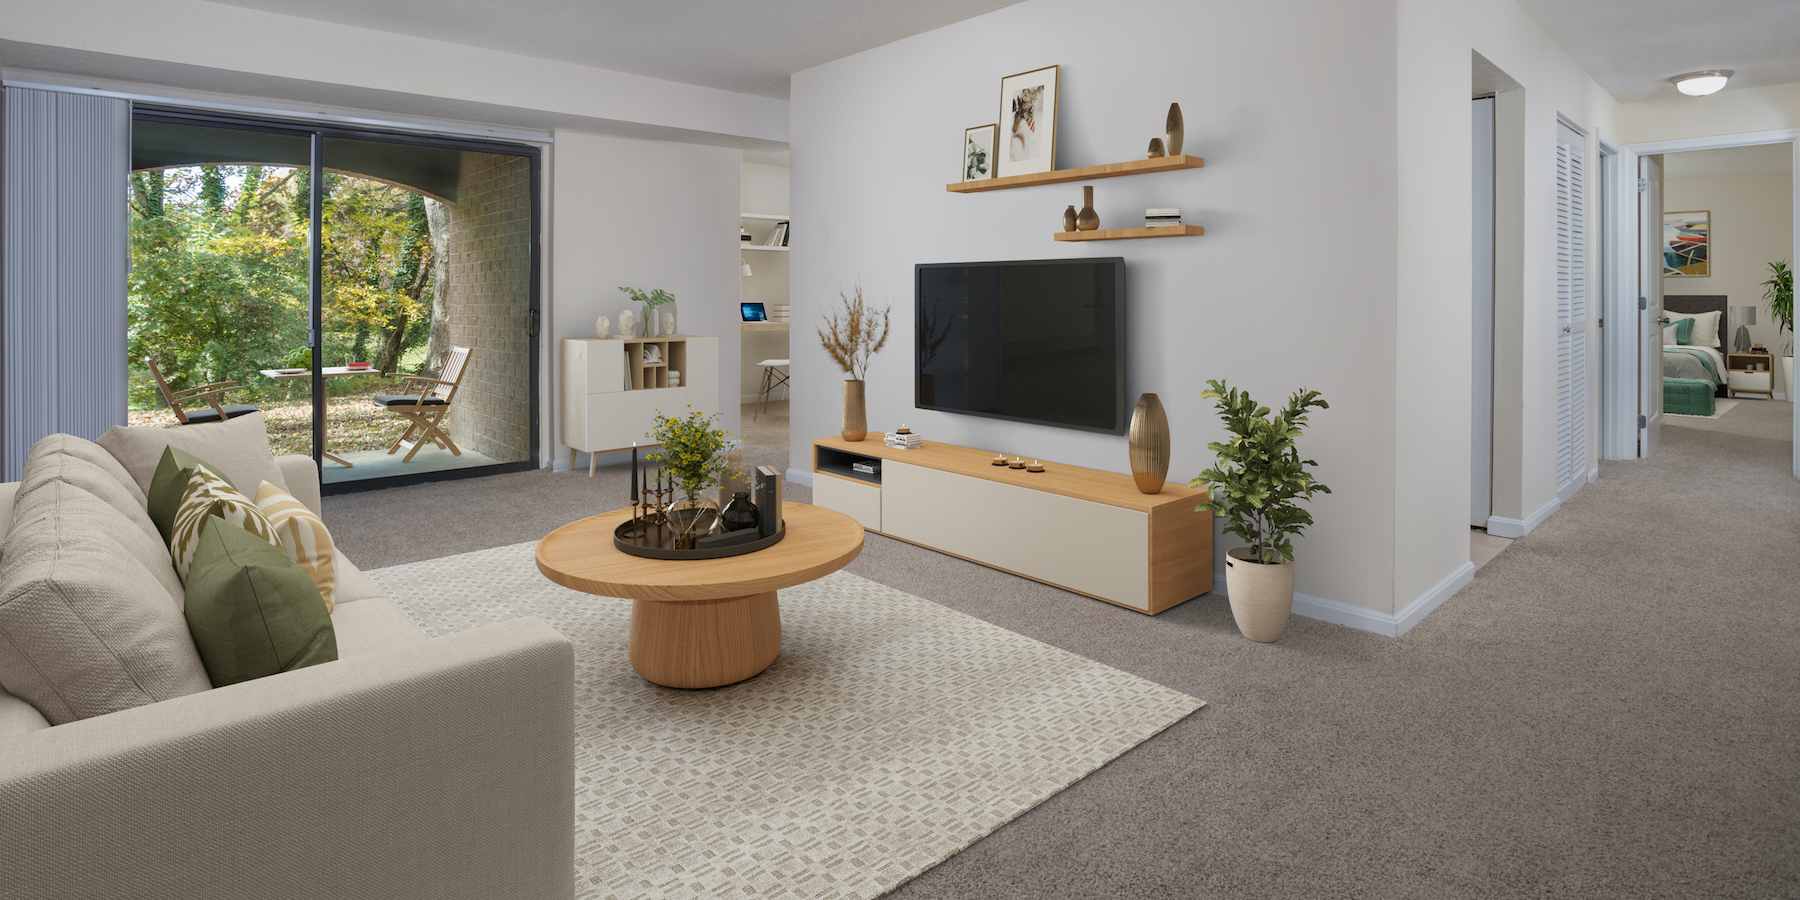 Glen Oaks living room and main living areas